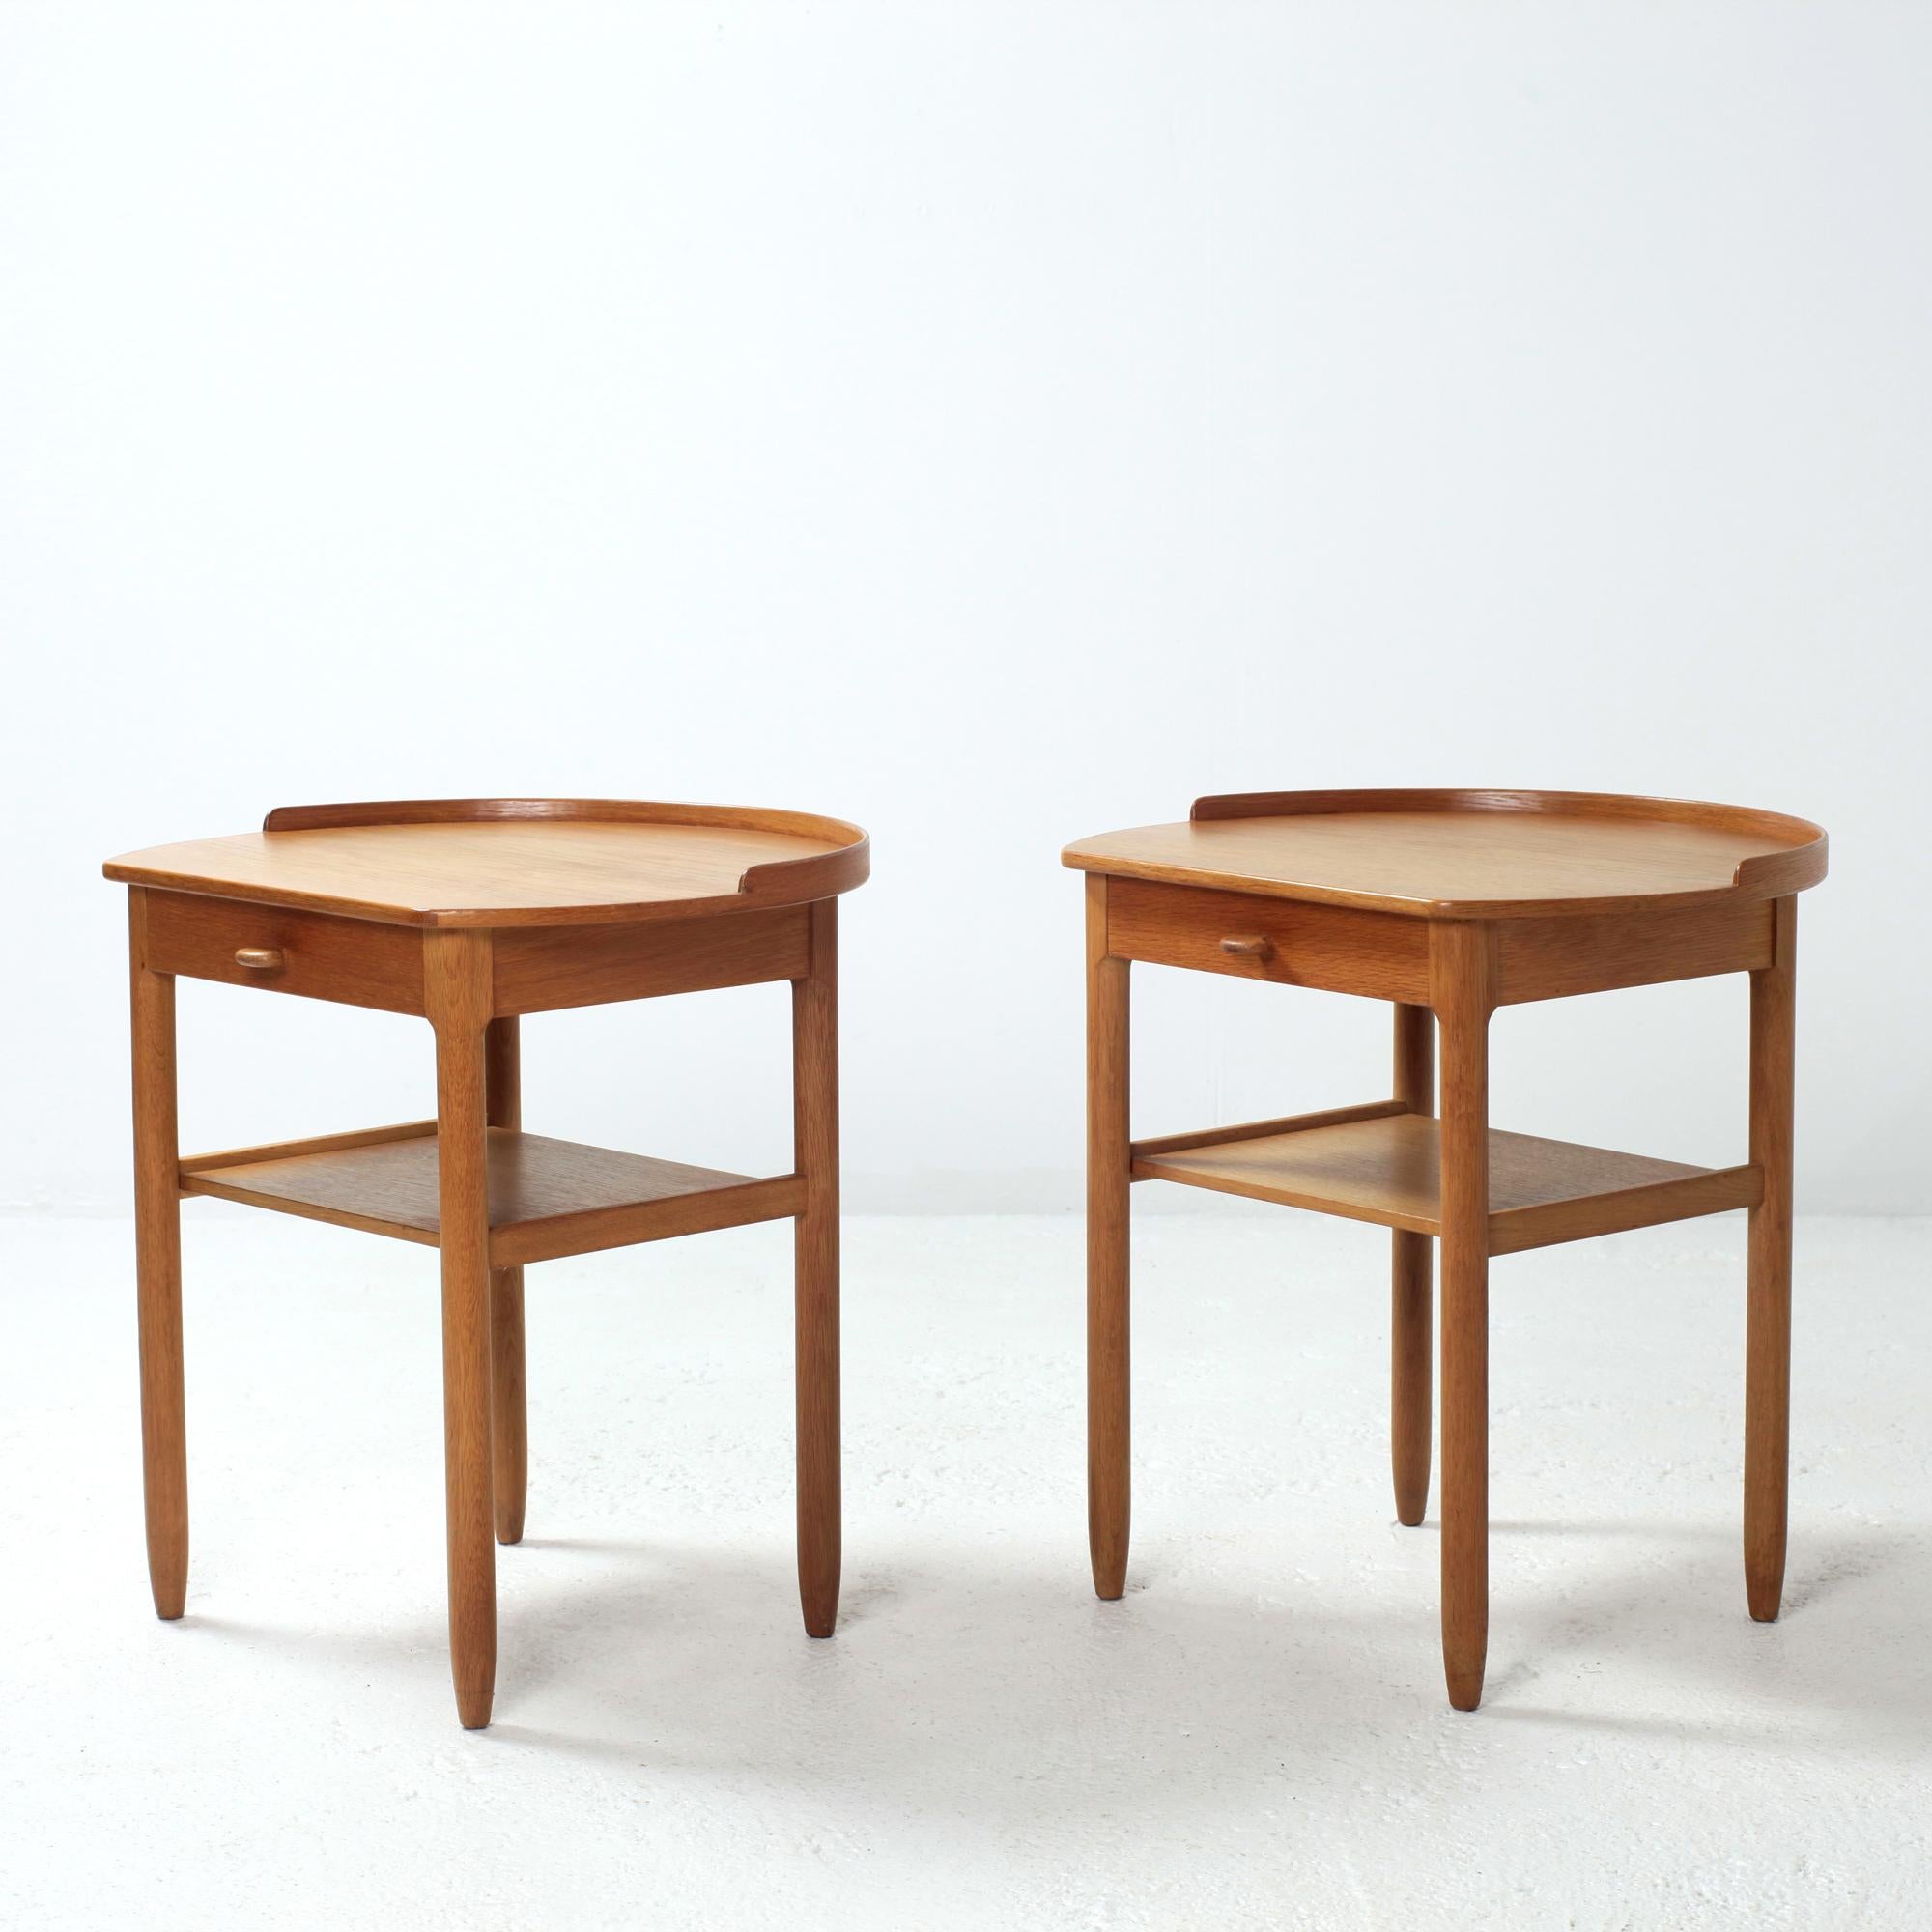 Scandinavian Modern Pair of Bedside Tables by Sven Engström and Gunnar Myrstrand for Bodafors 1960's